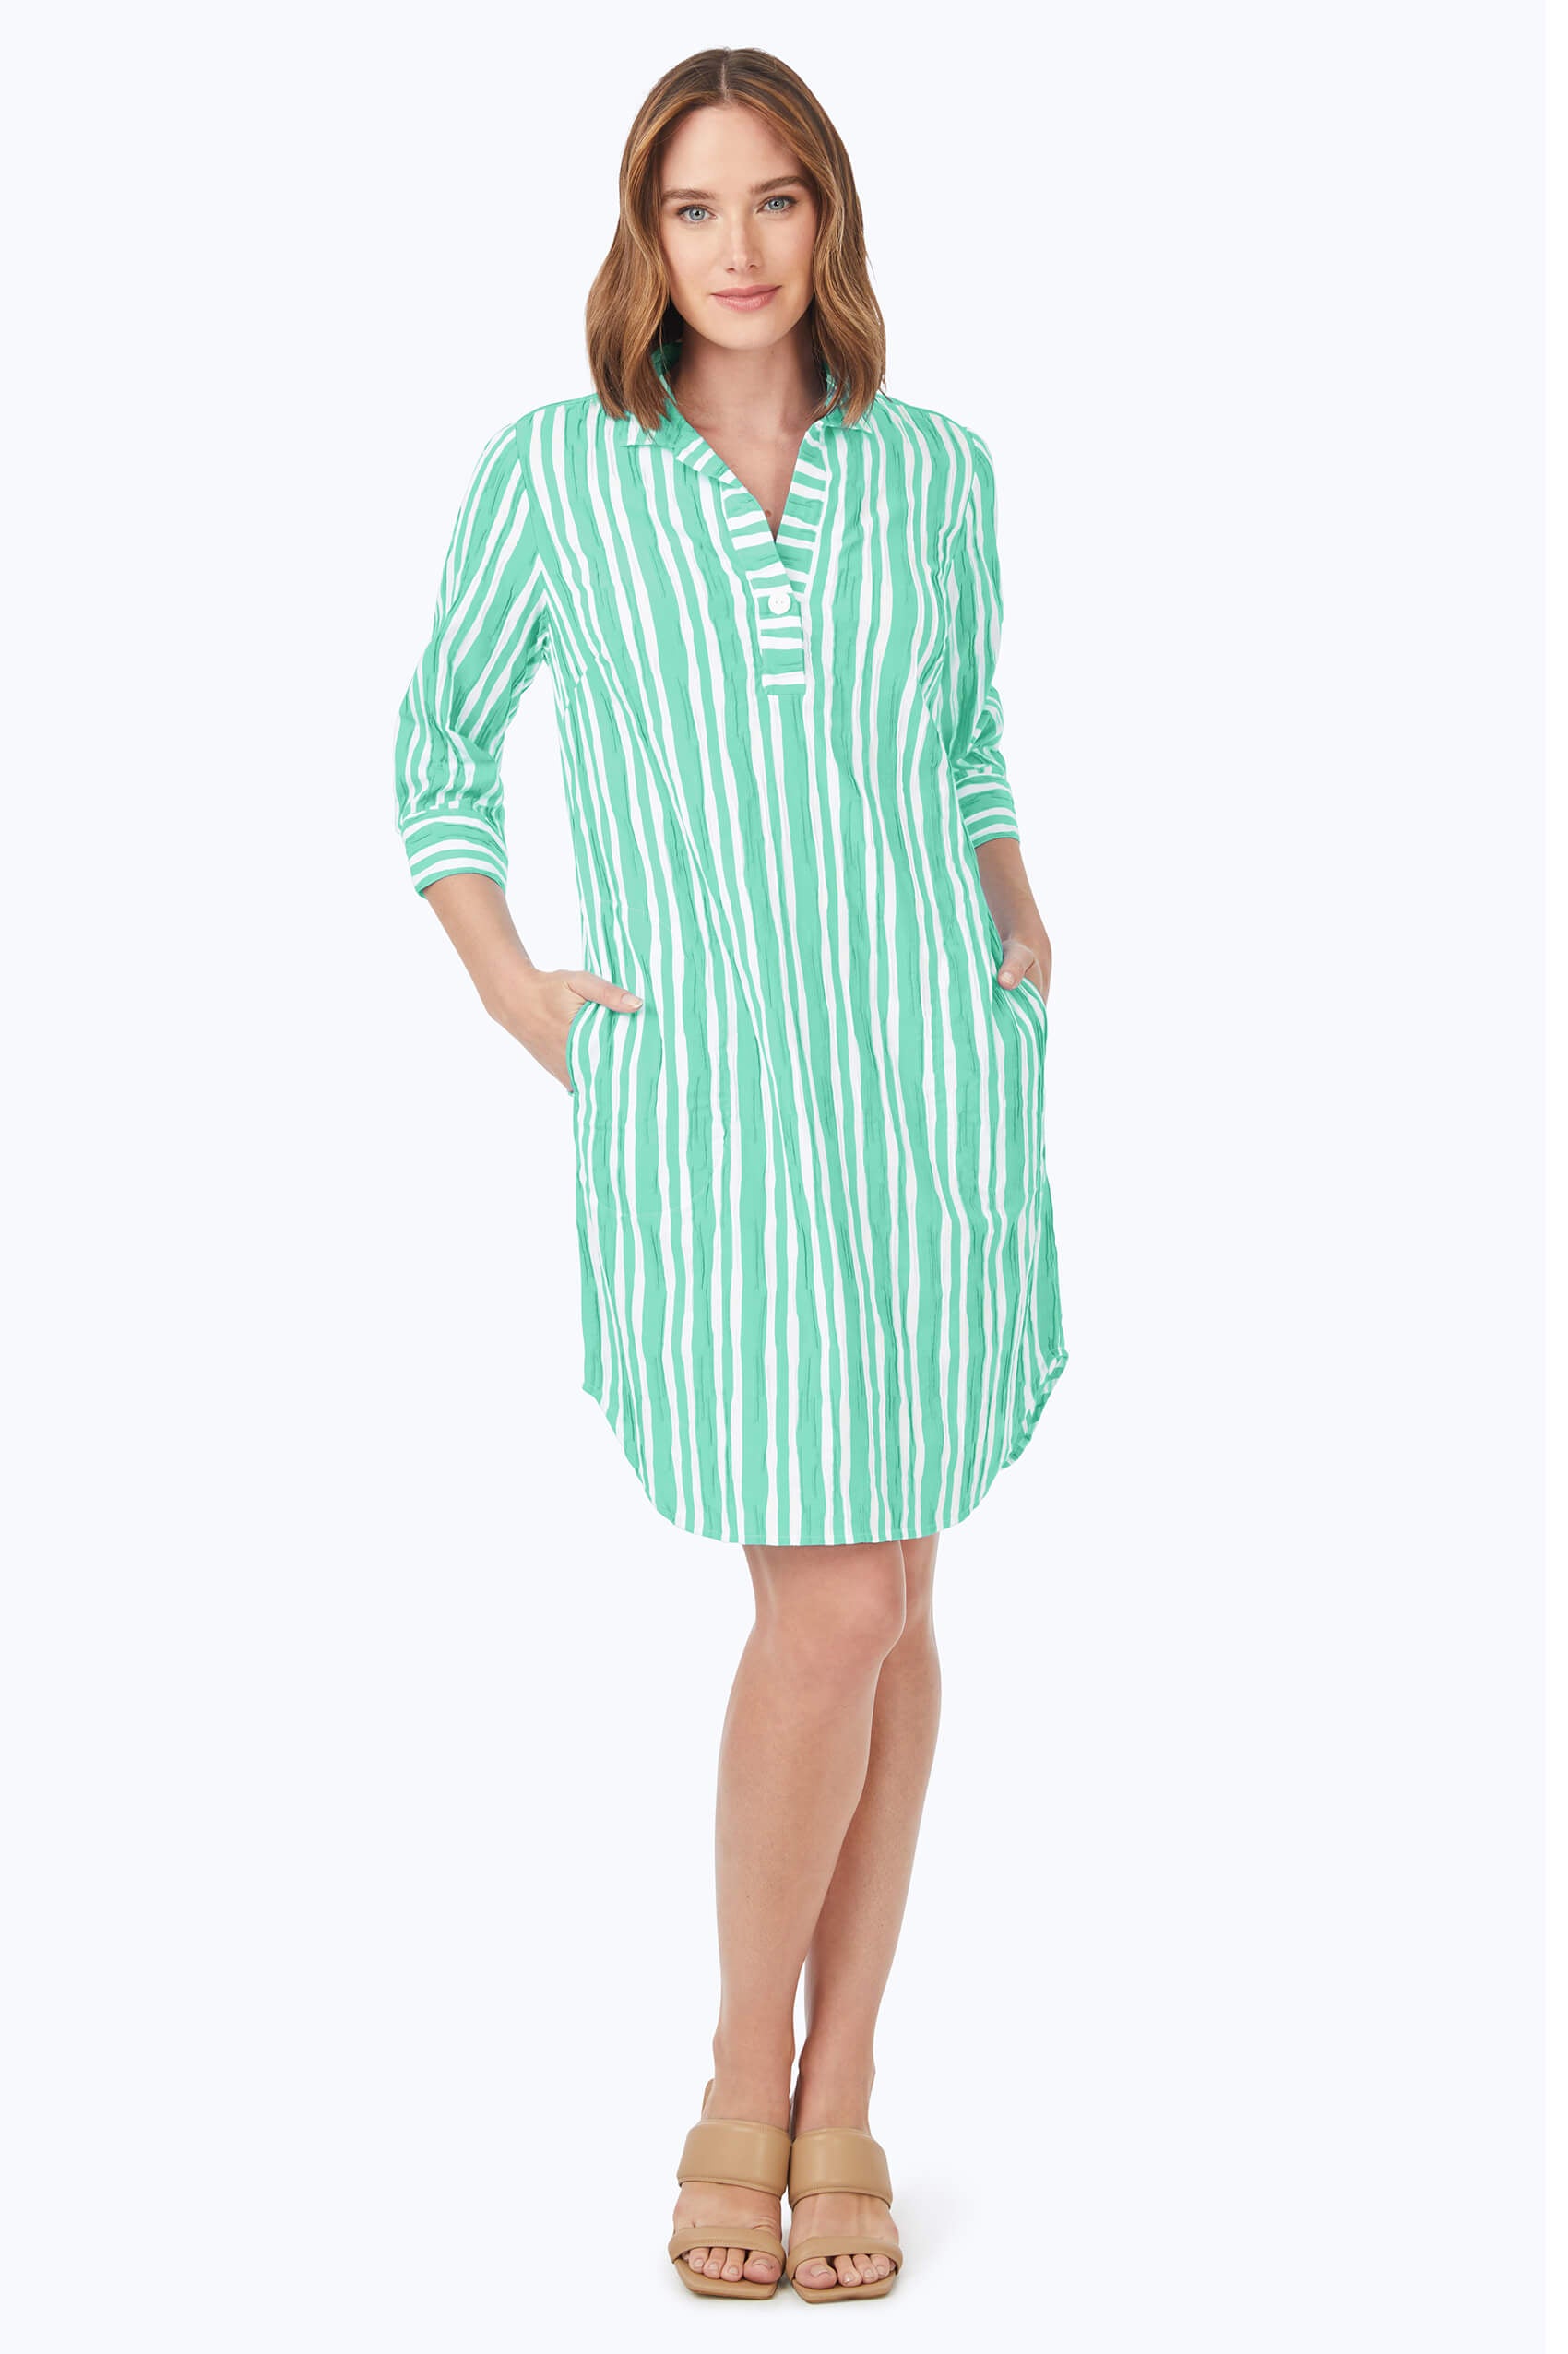 Sloane Beach Stripe Crinkle Dress